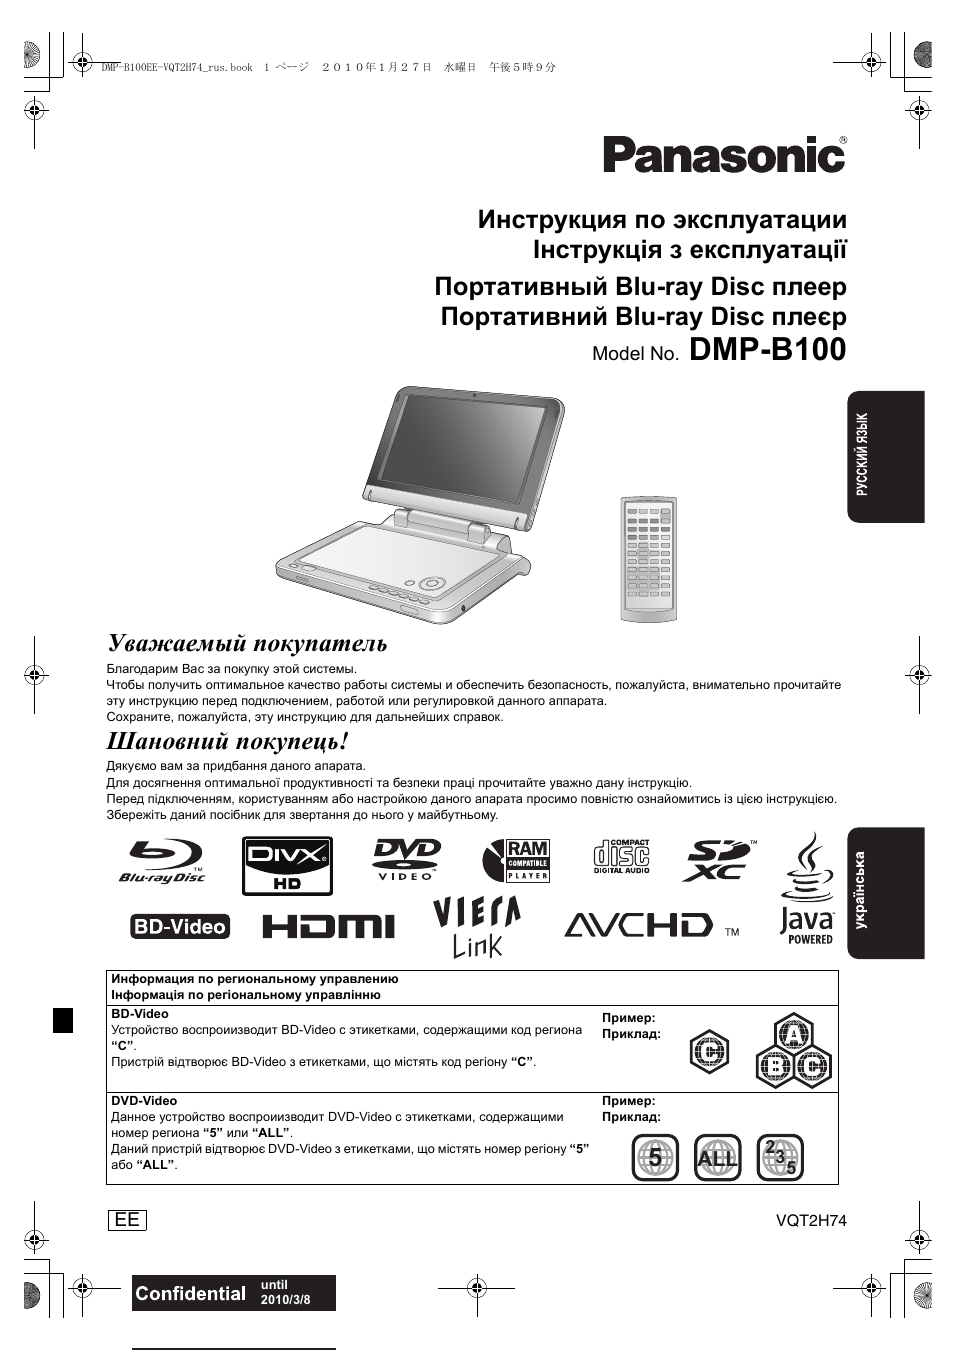 Инструкция по эксплуатации Panasonic DMP-B100 | 45 страниц